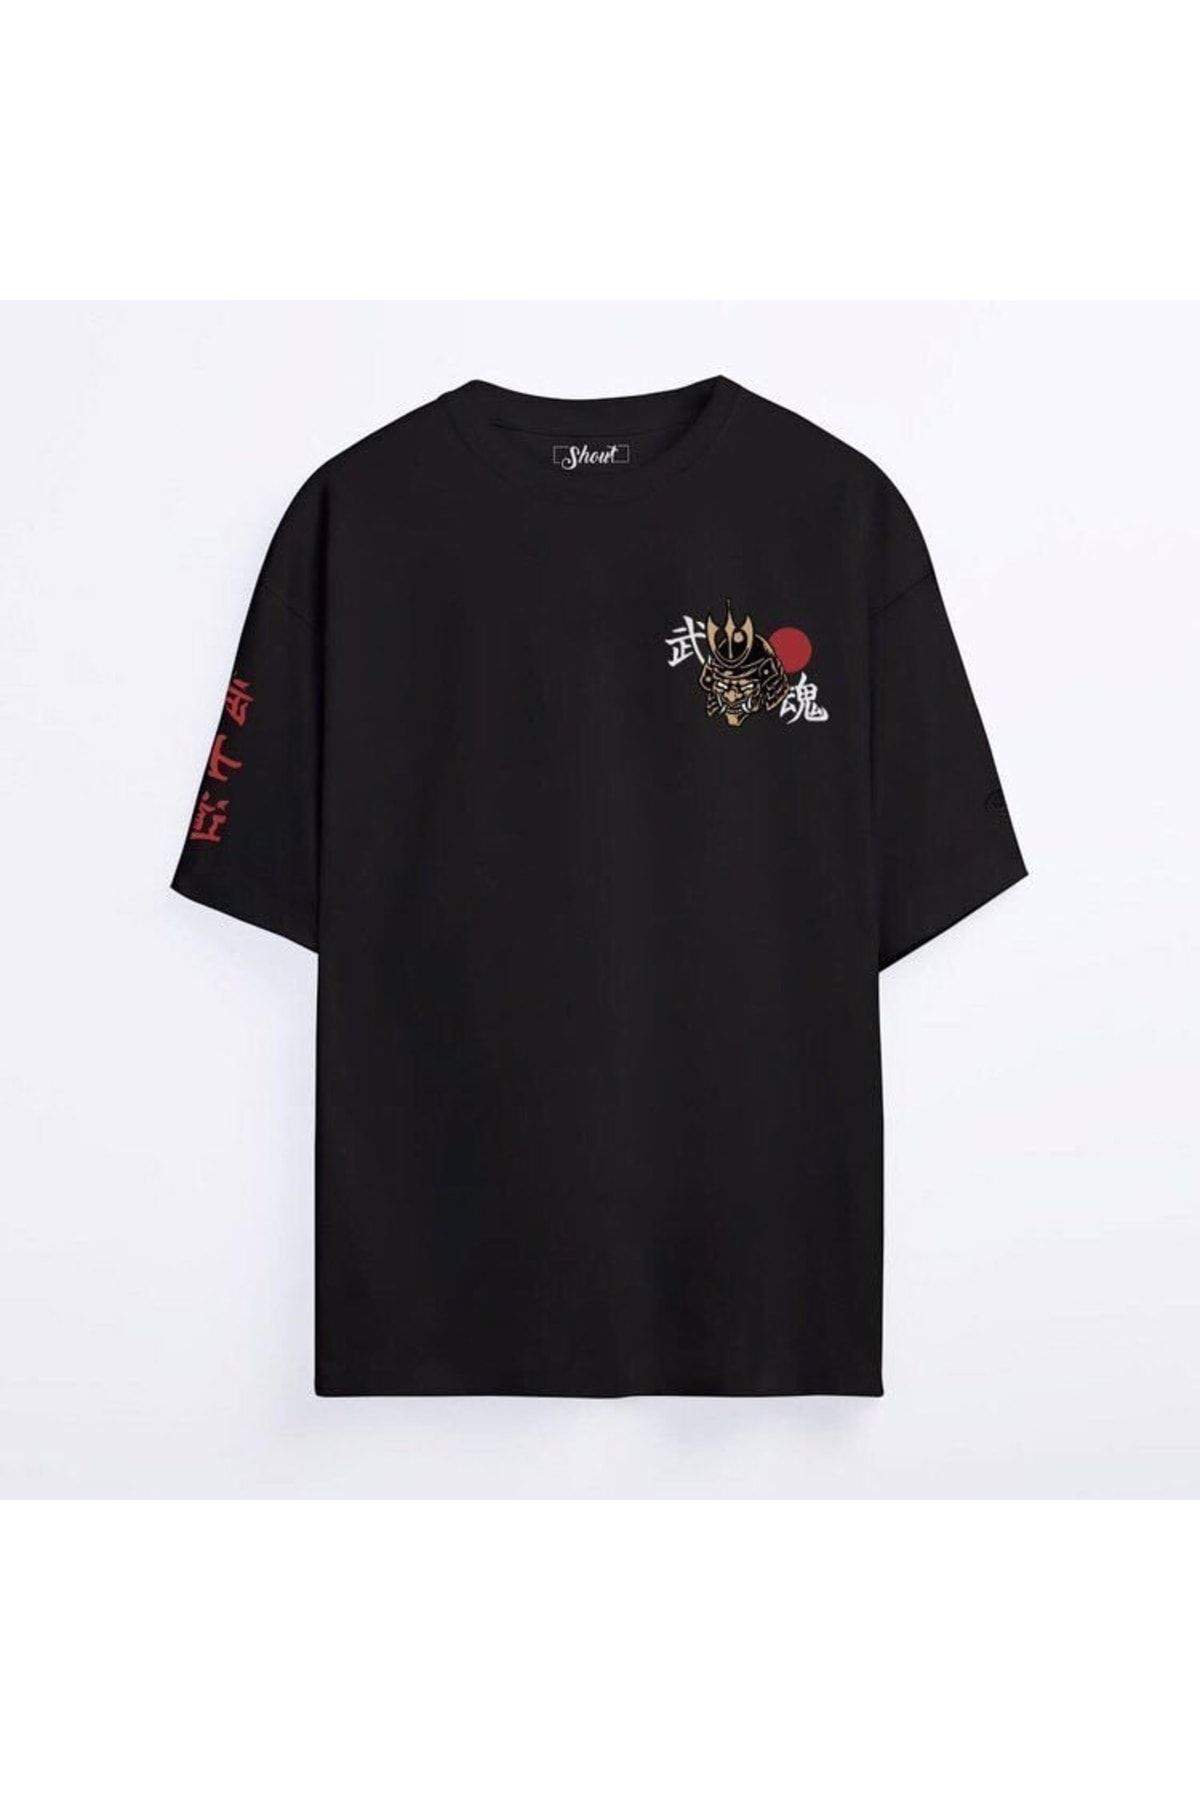 Shout Oversize Limited Edition Samurai Unisex T-shirt